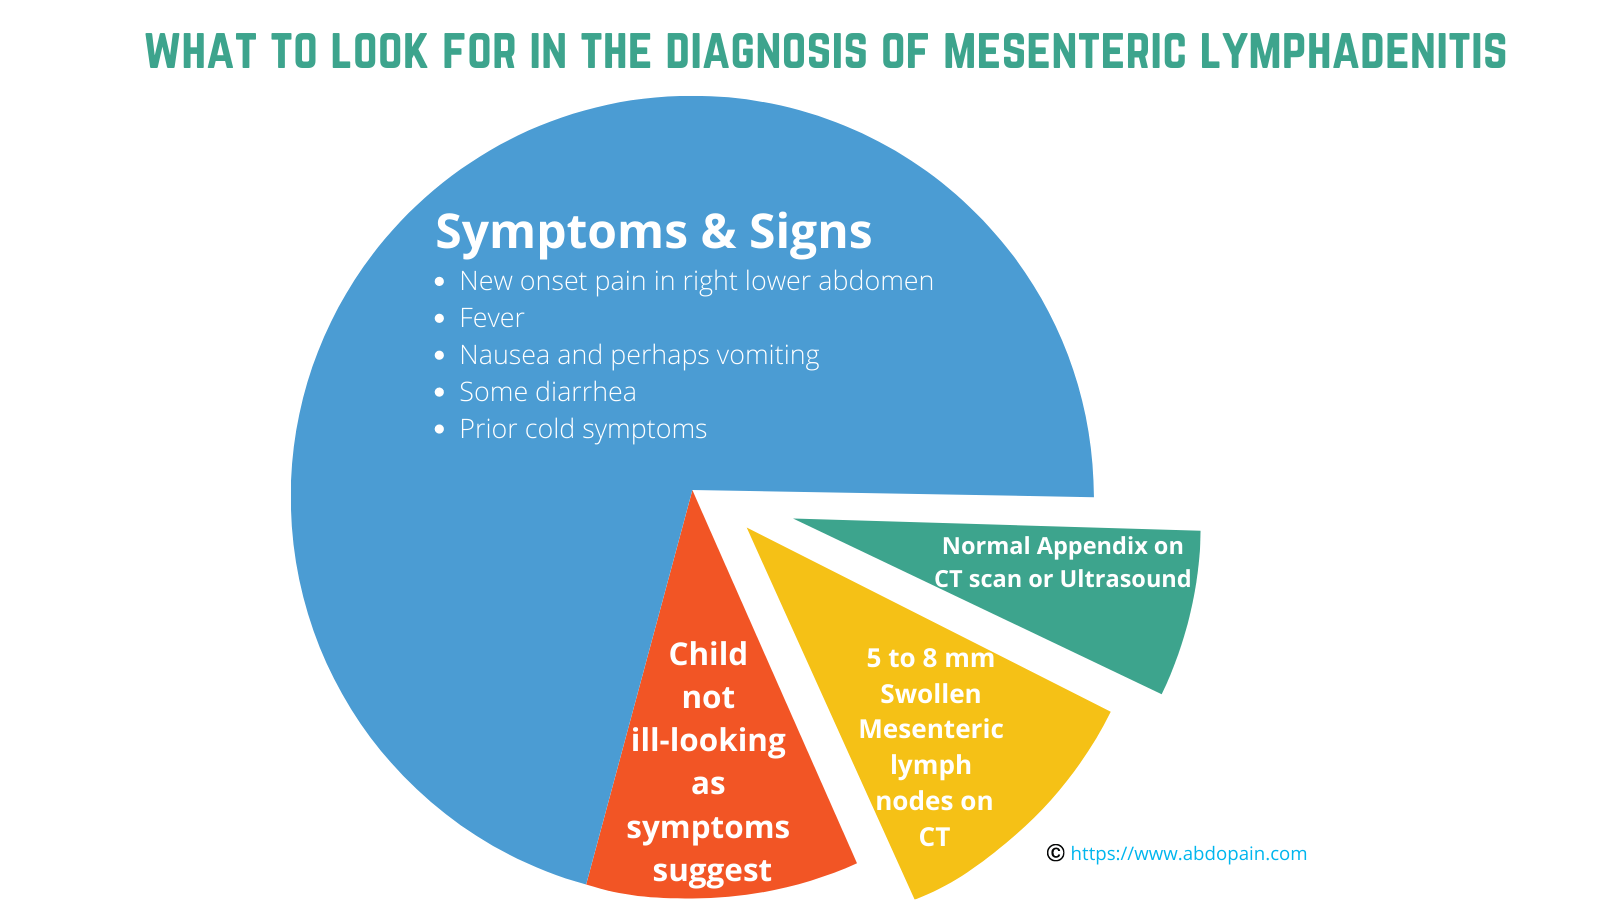 How is mesenteric lymphadenitis diagnosed?